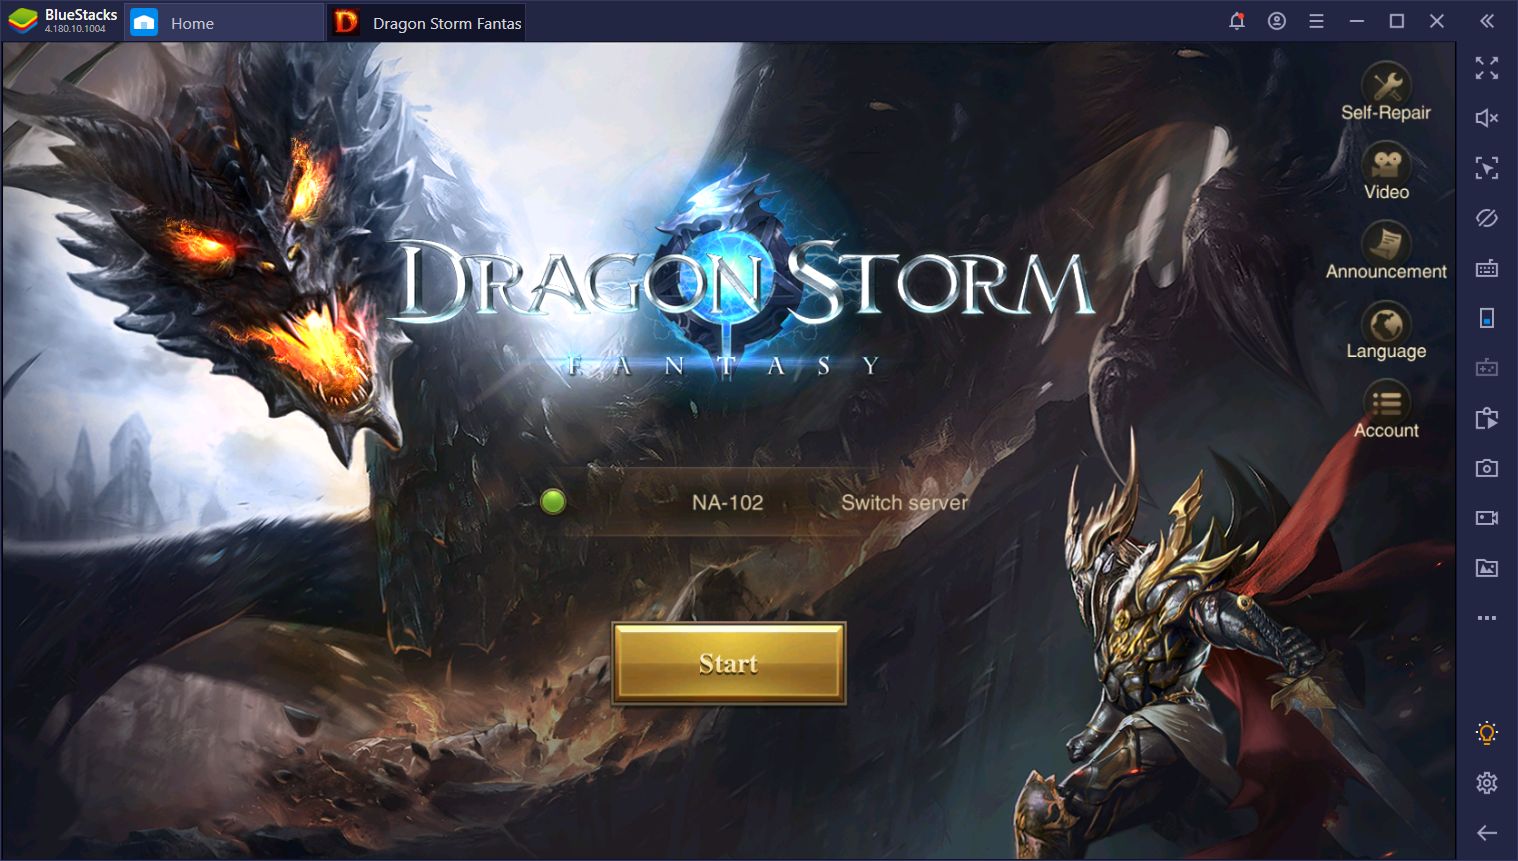 Beginner’s Guide for Dragon Storm Fantasy on PC